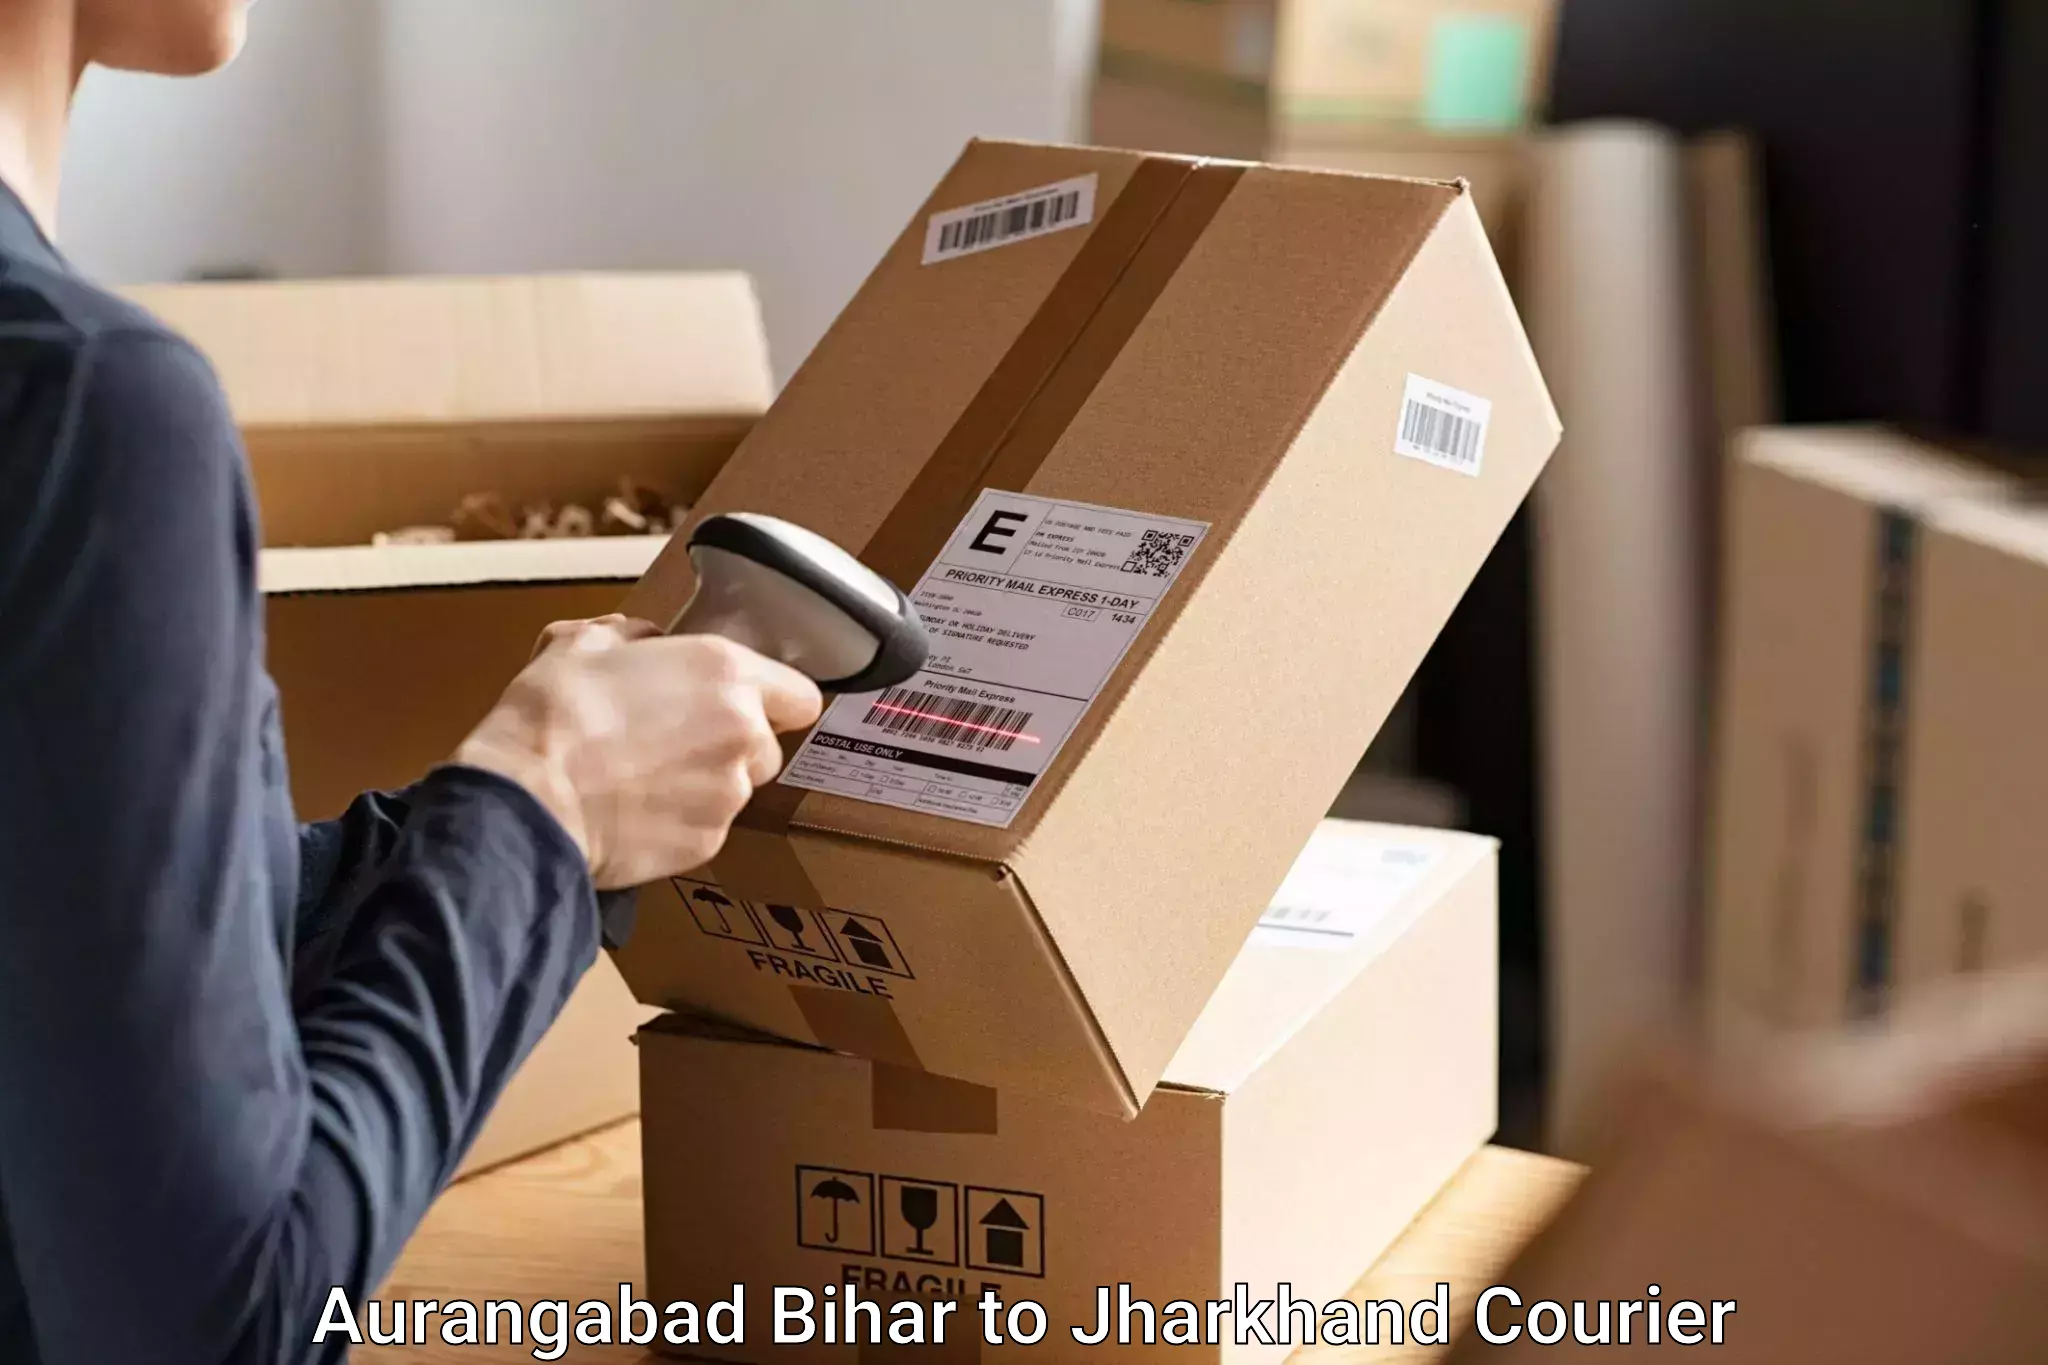 Baggage shipping experts Aurangabad Bihar to Domchanch